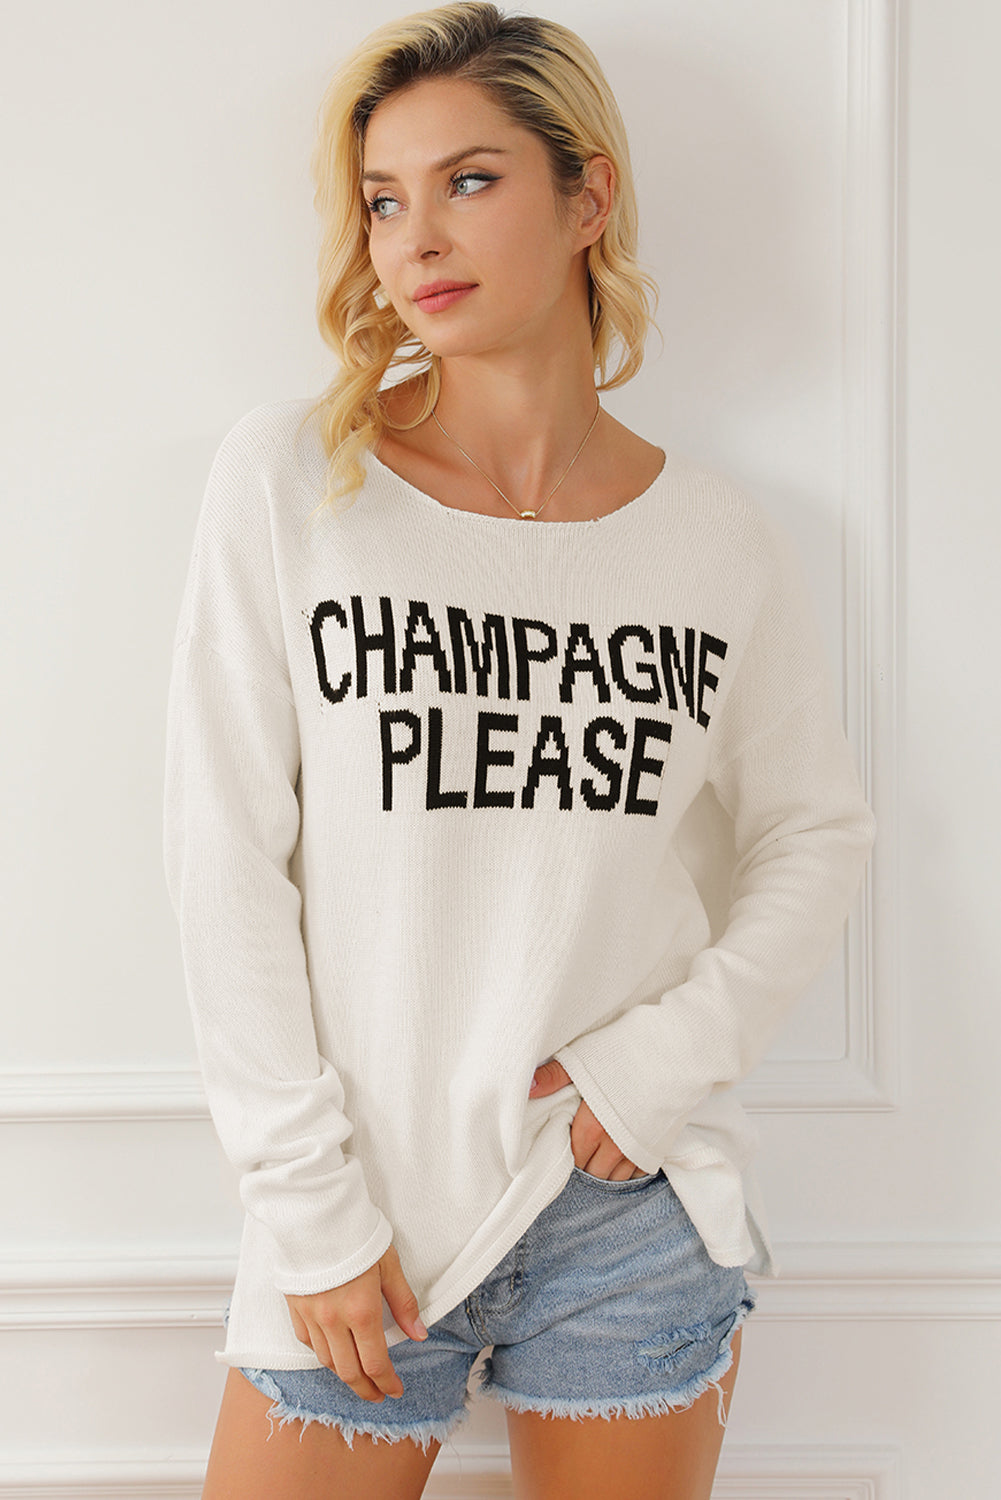 Desert Palm Champagne Please Graphic Sweater OniTakai